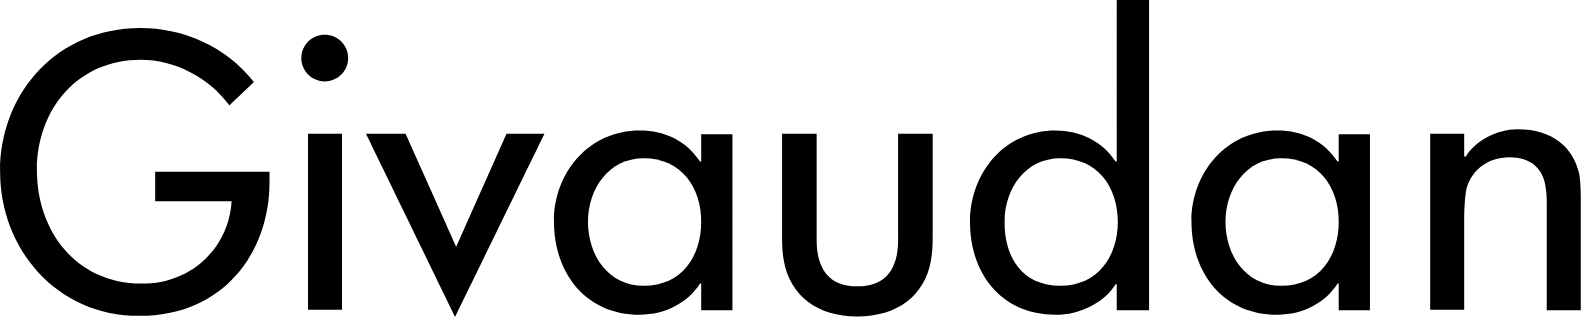 Givaudan logo large (transparent PNG)